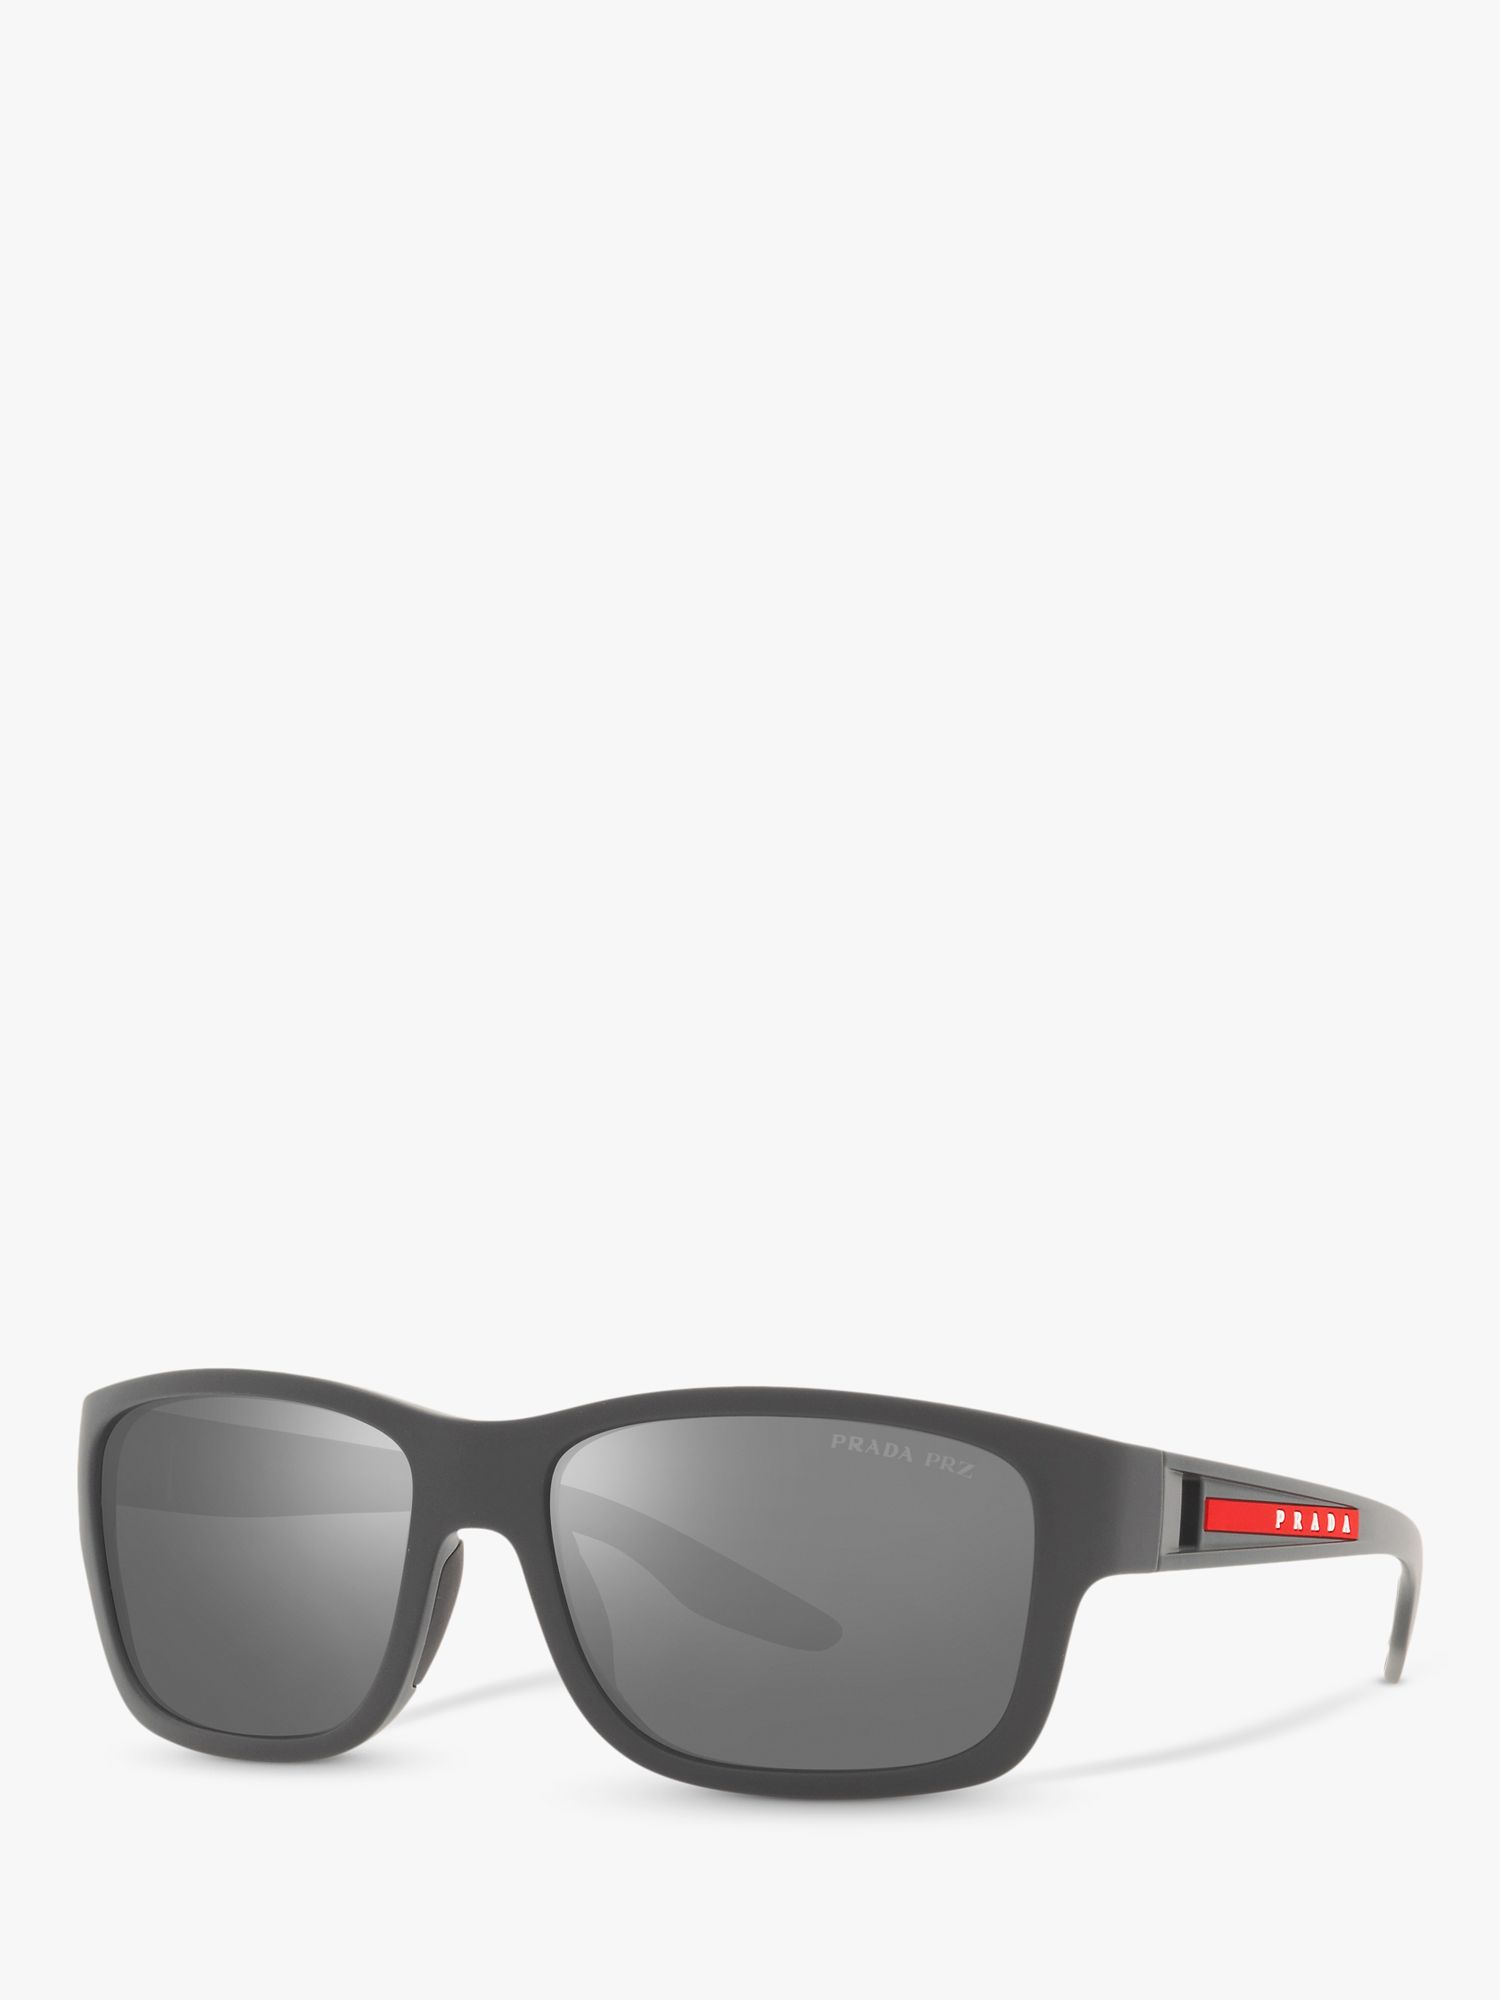 Prada Linea Rossa PS 01WS Men's Pillow Polarised Sunglasses, Grey/Matte  Silver at John Lewis & Partners